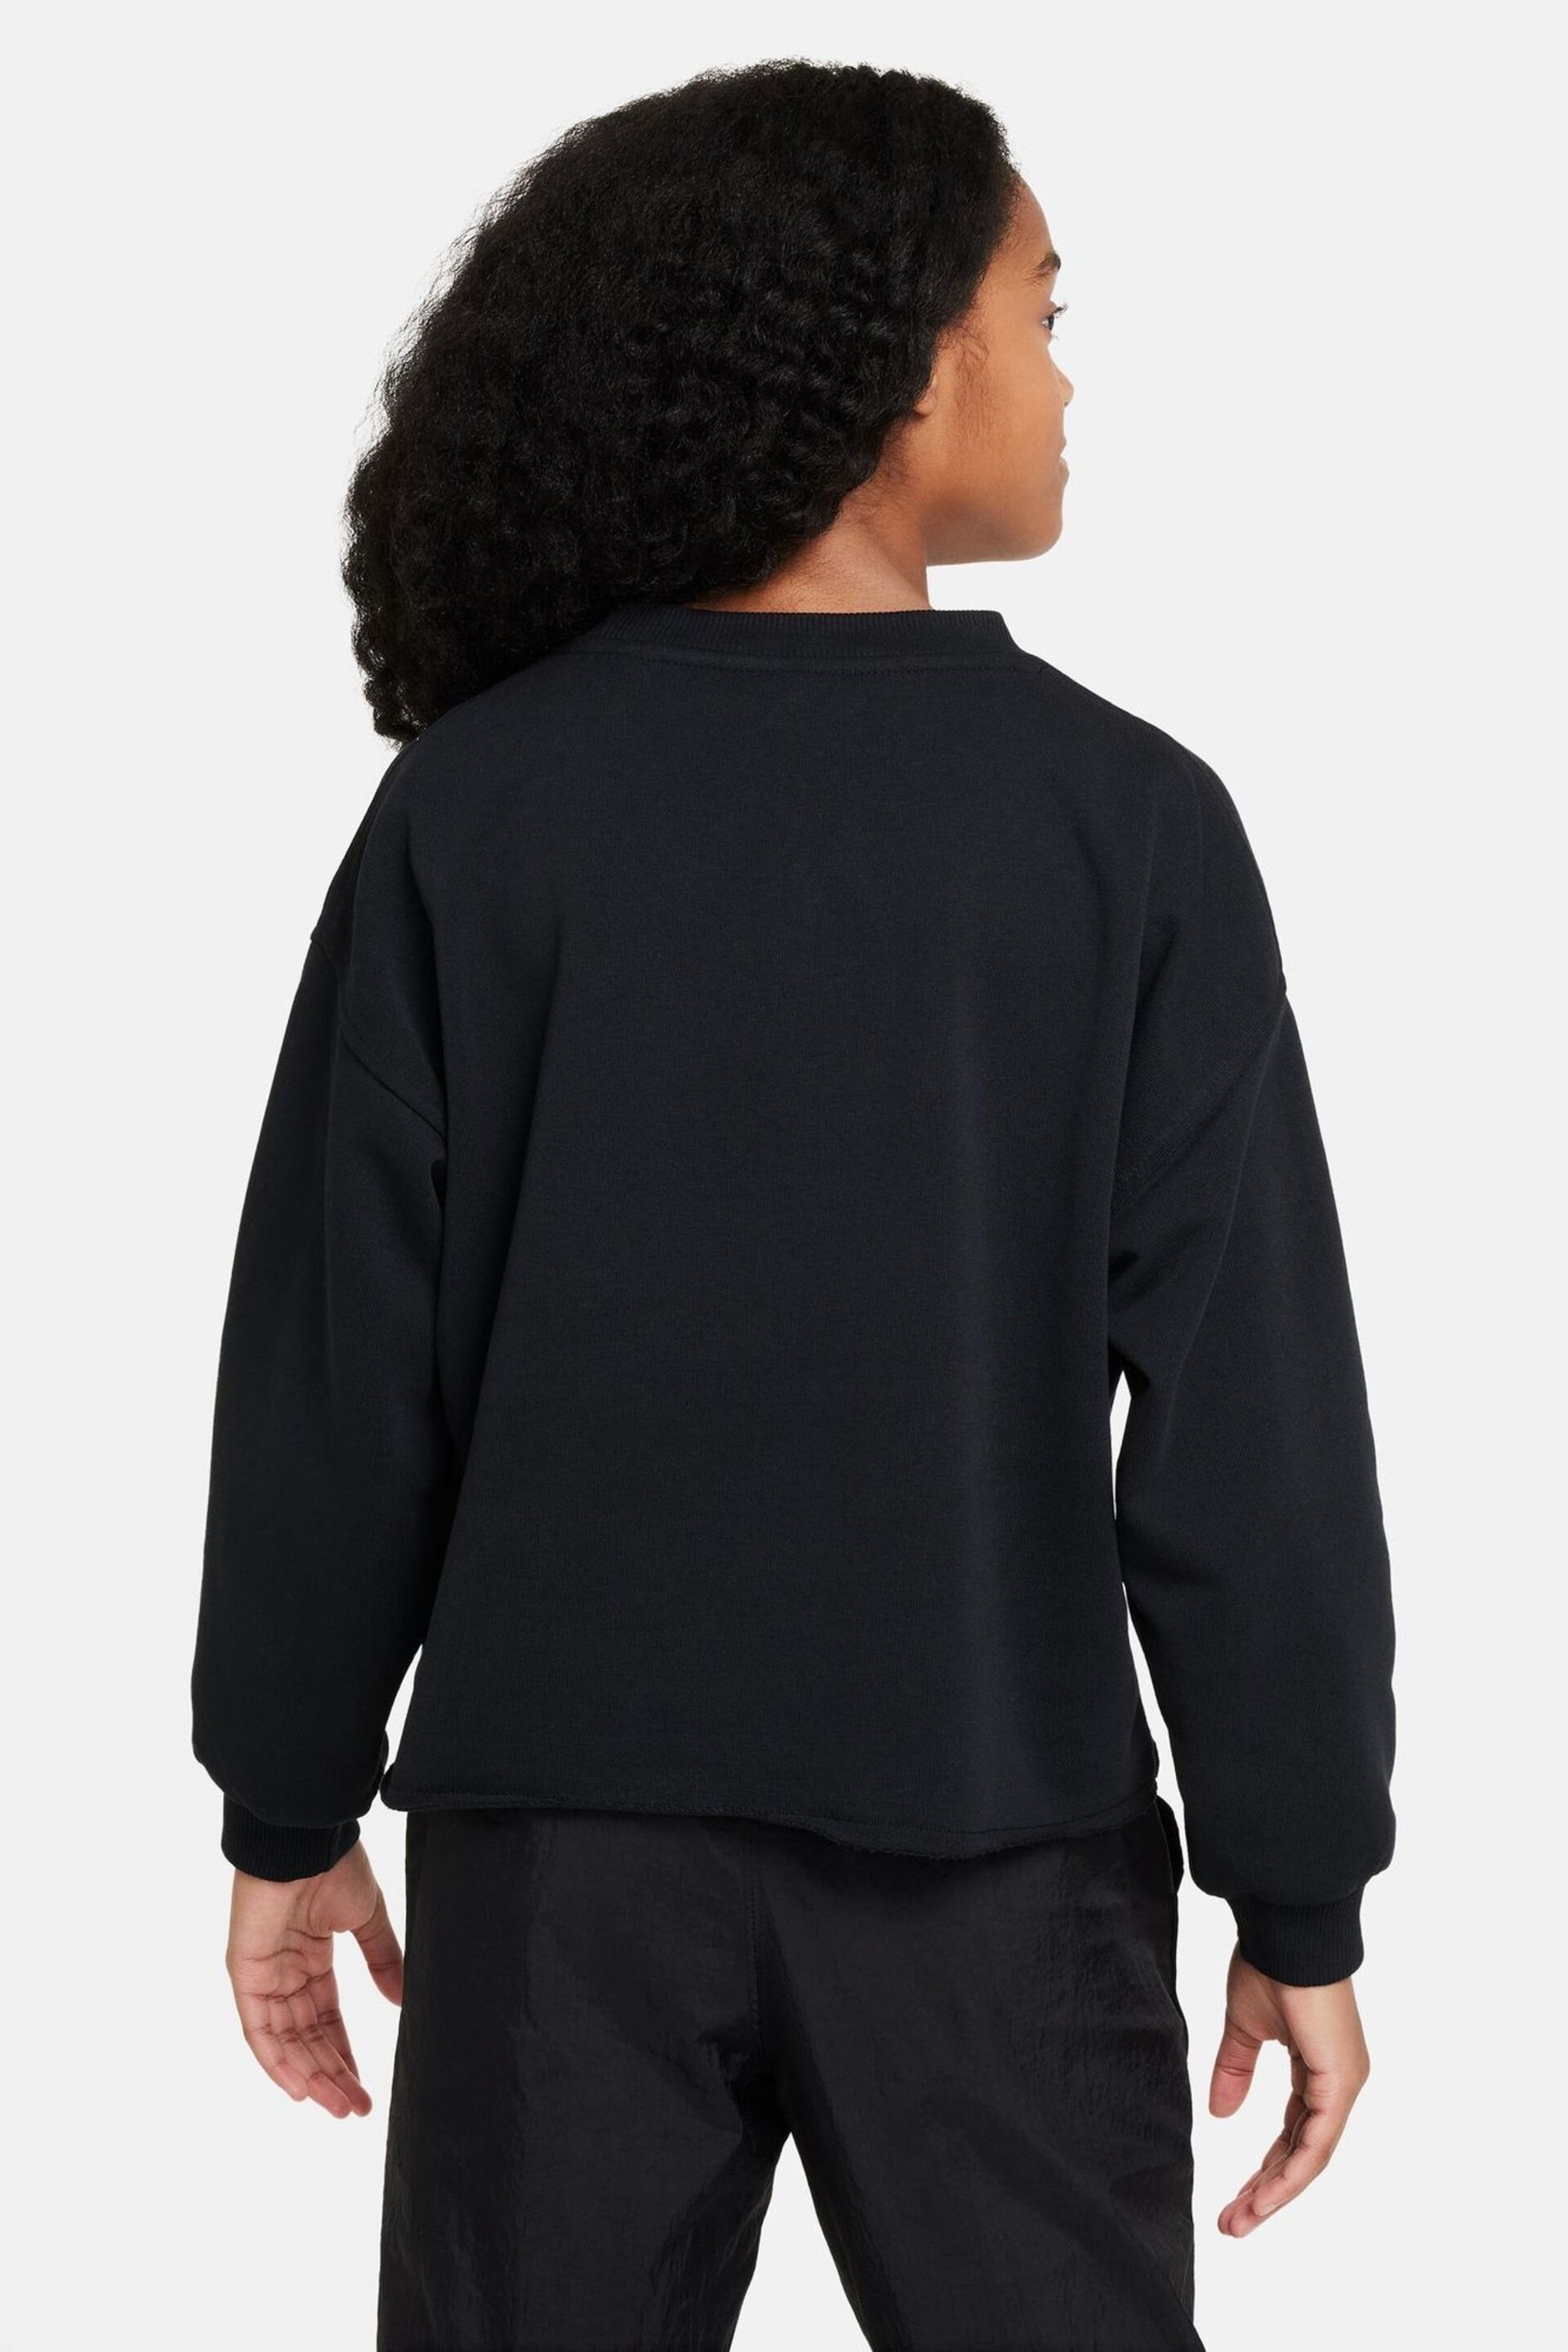 Nike Black Dri-FIT Dance Sweatshirt - Image 2 of 4